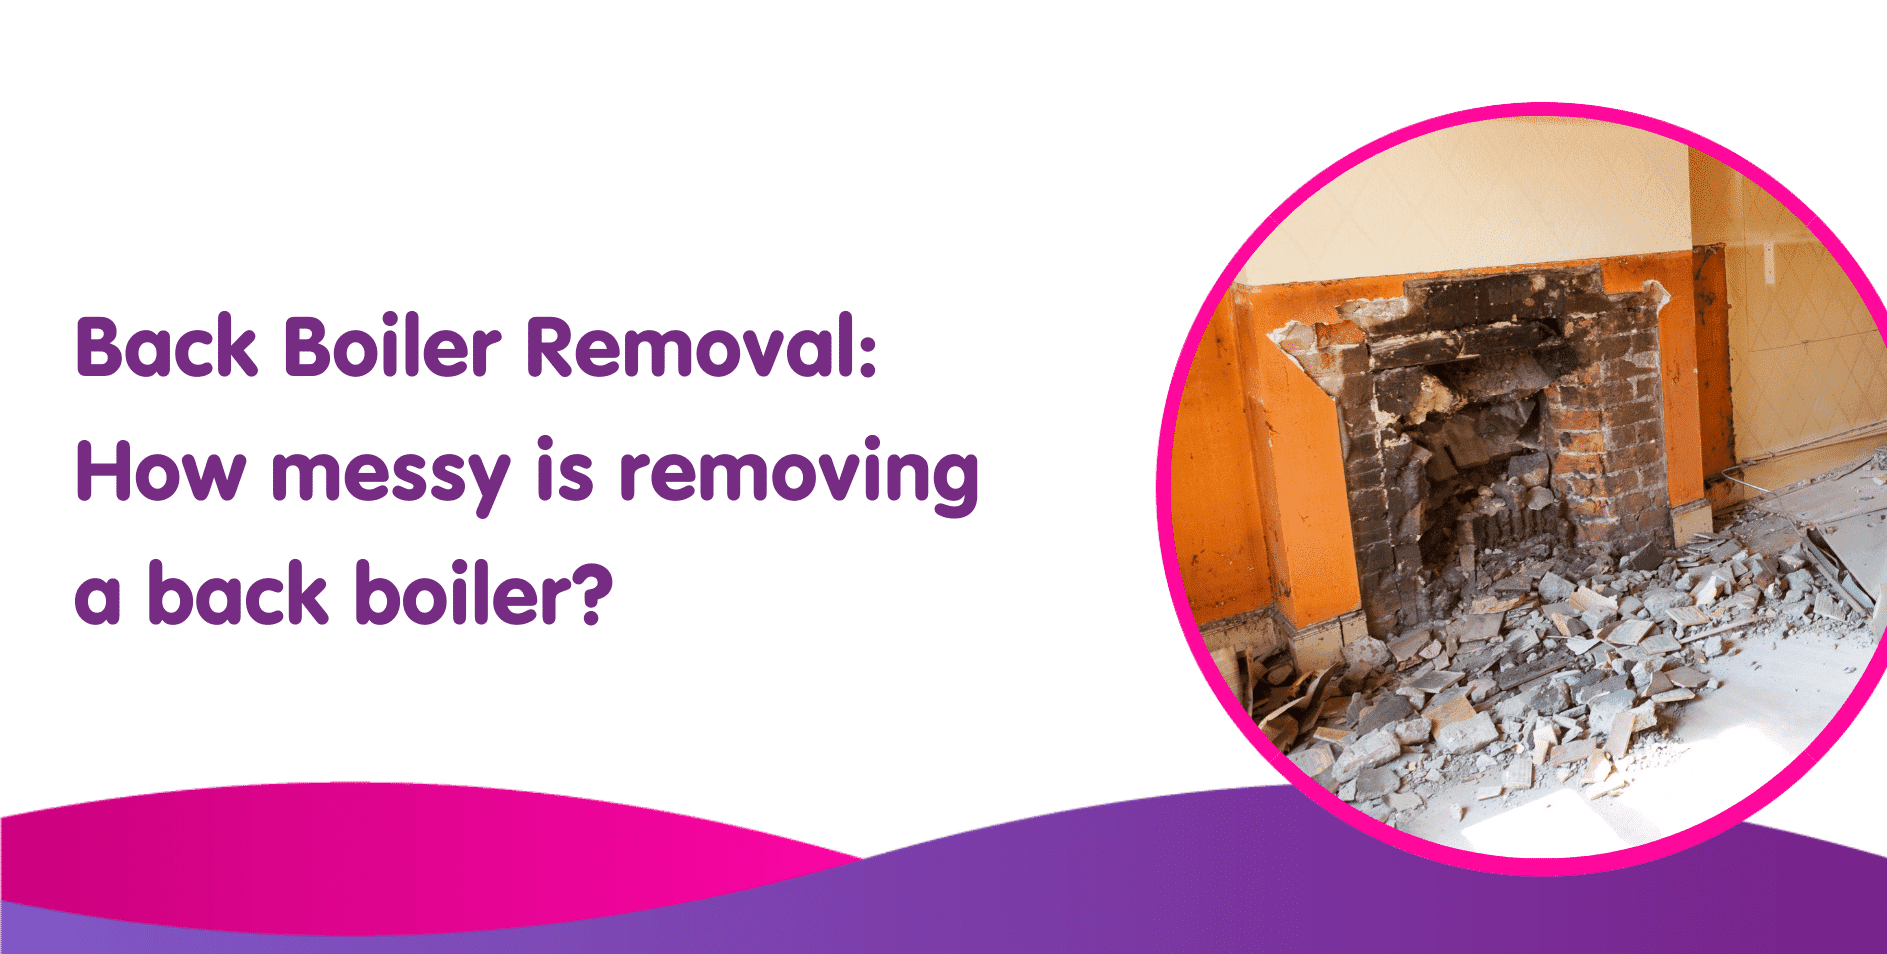 Back Boiler Removal: How messy is removing a back boiler?